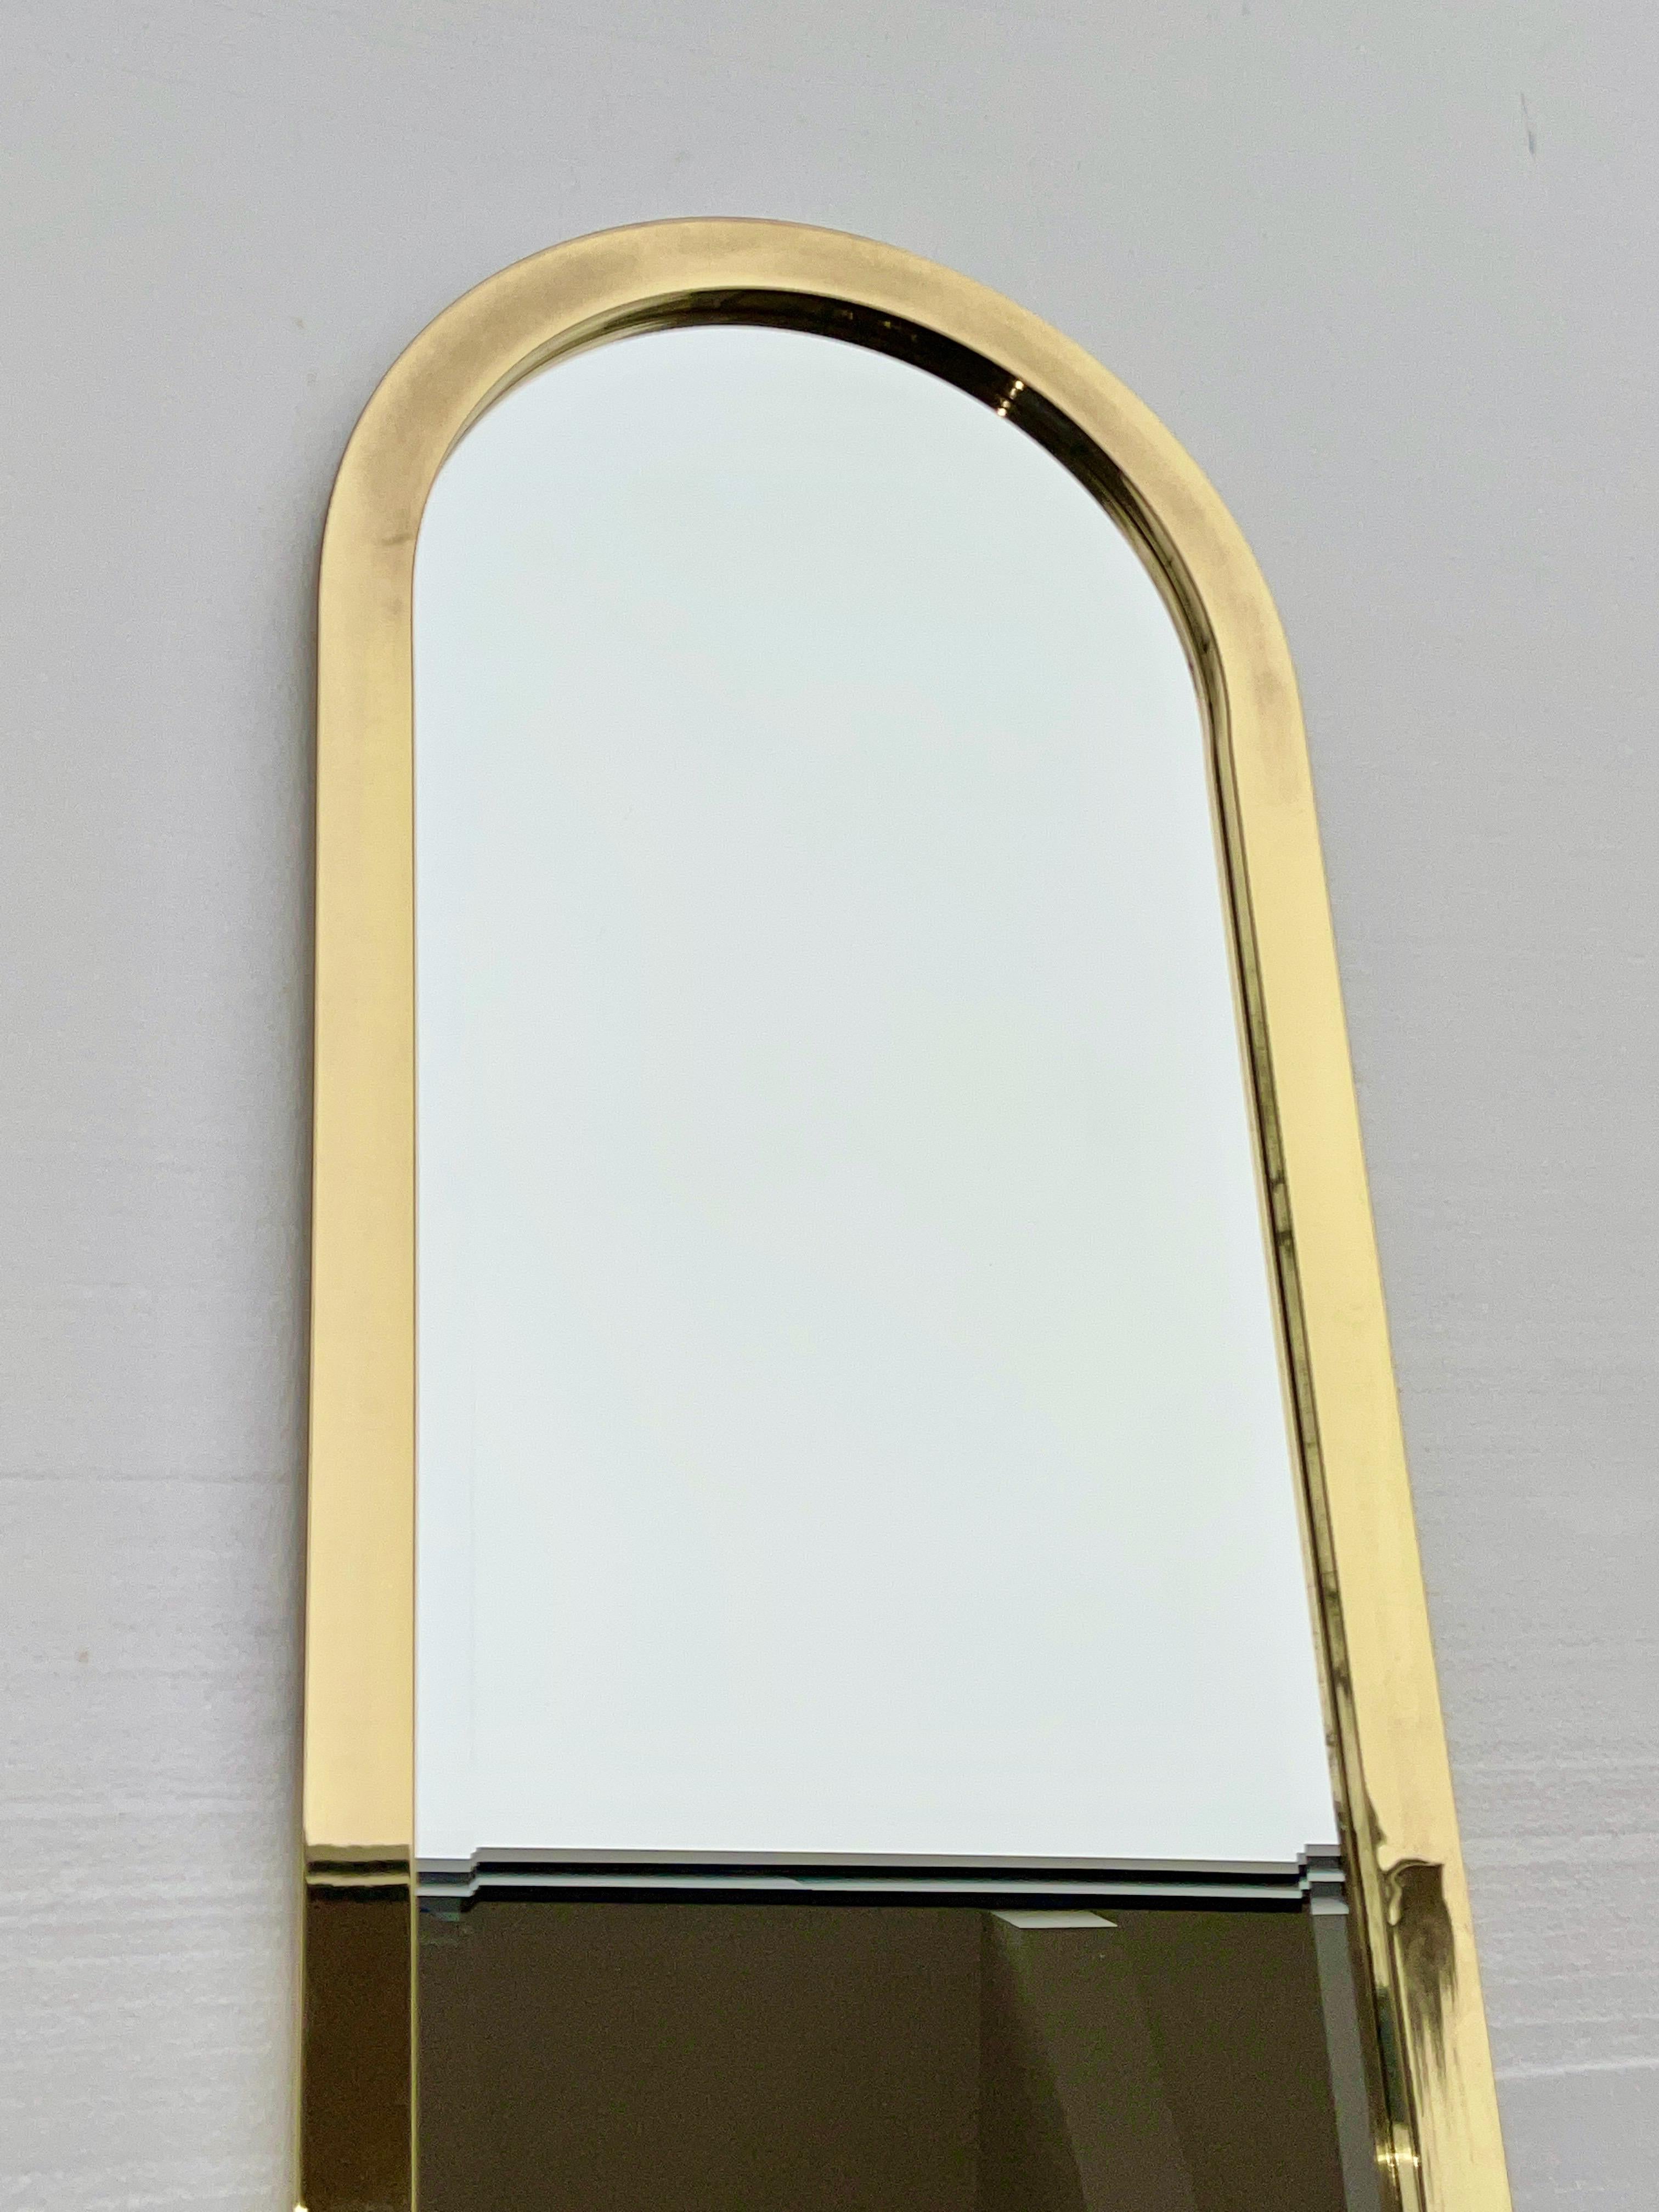 DIA Design Institute America Brass Racetrack Oval Mirror with Demilune Shelf In Good Condition For Sale In Hanover, MA